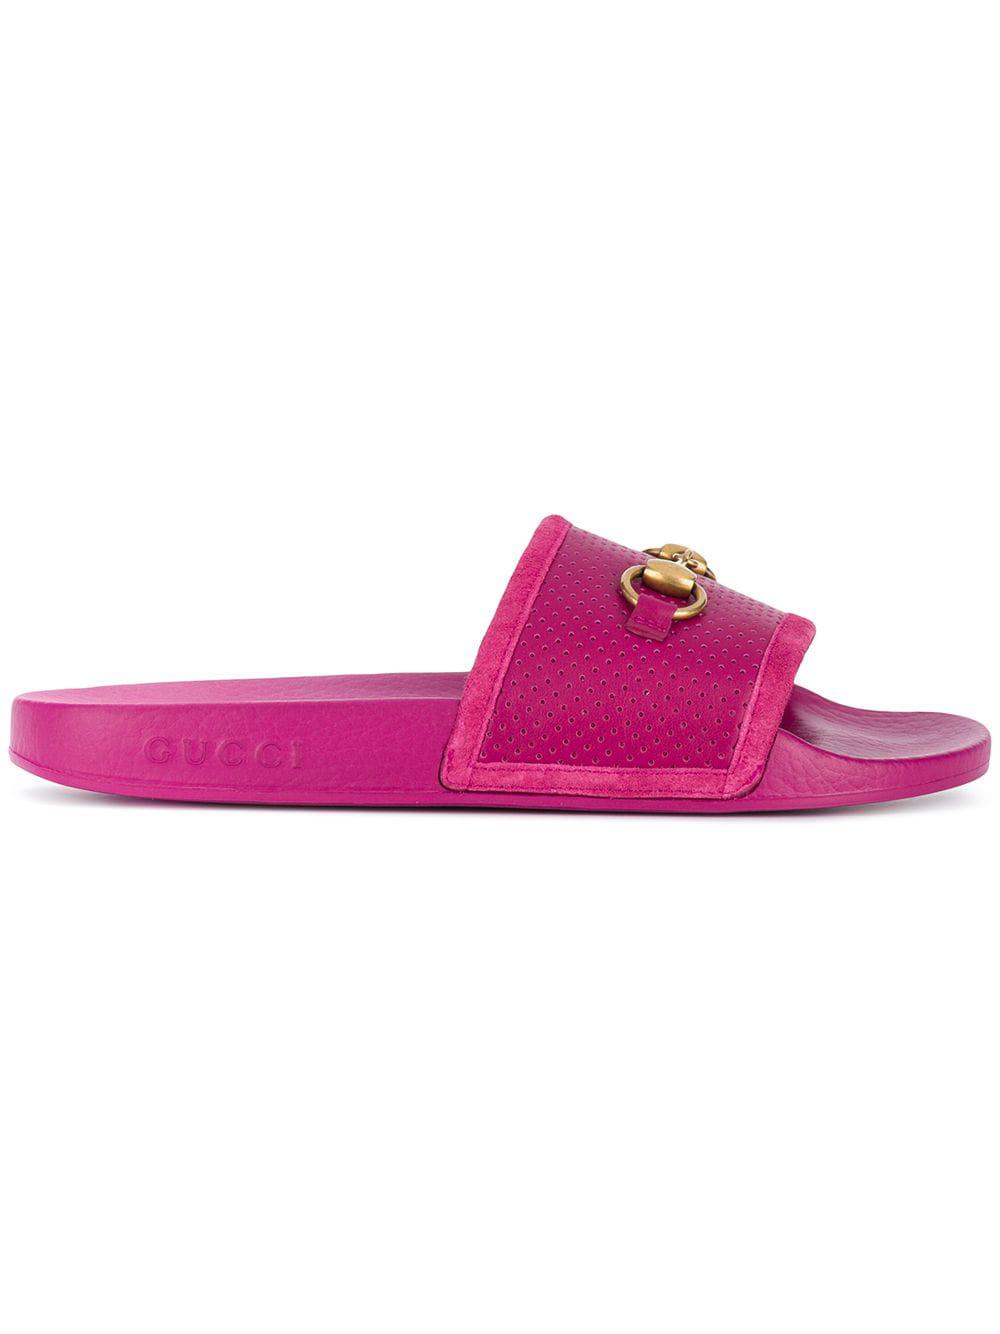 Gucci Leather Pursuit Horsebit Slides in Pink & Purple (Pink) - Lyst